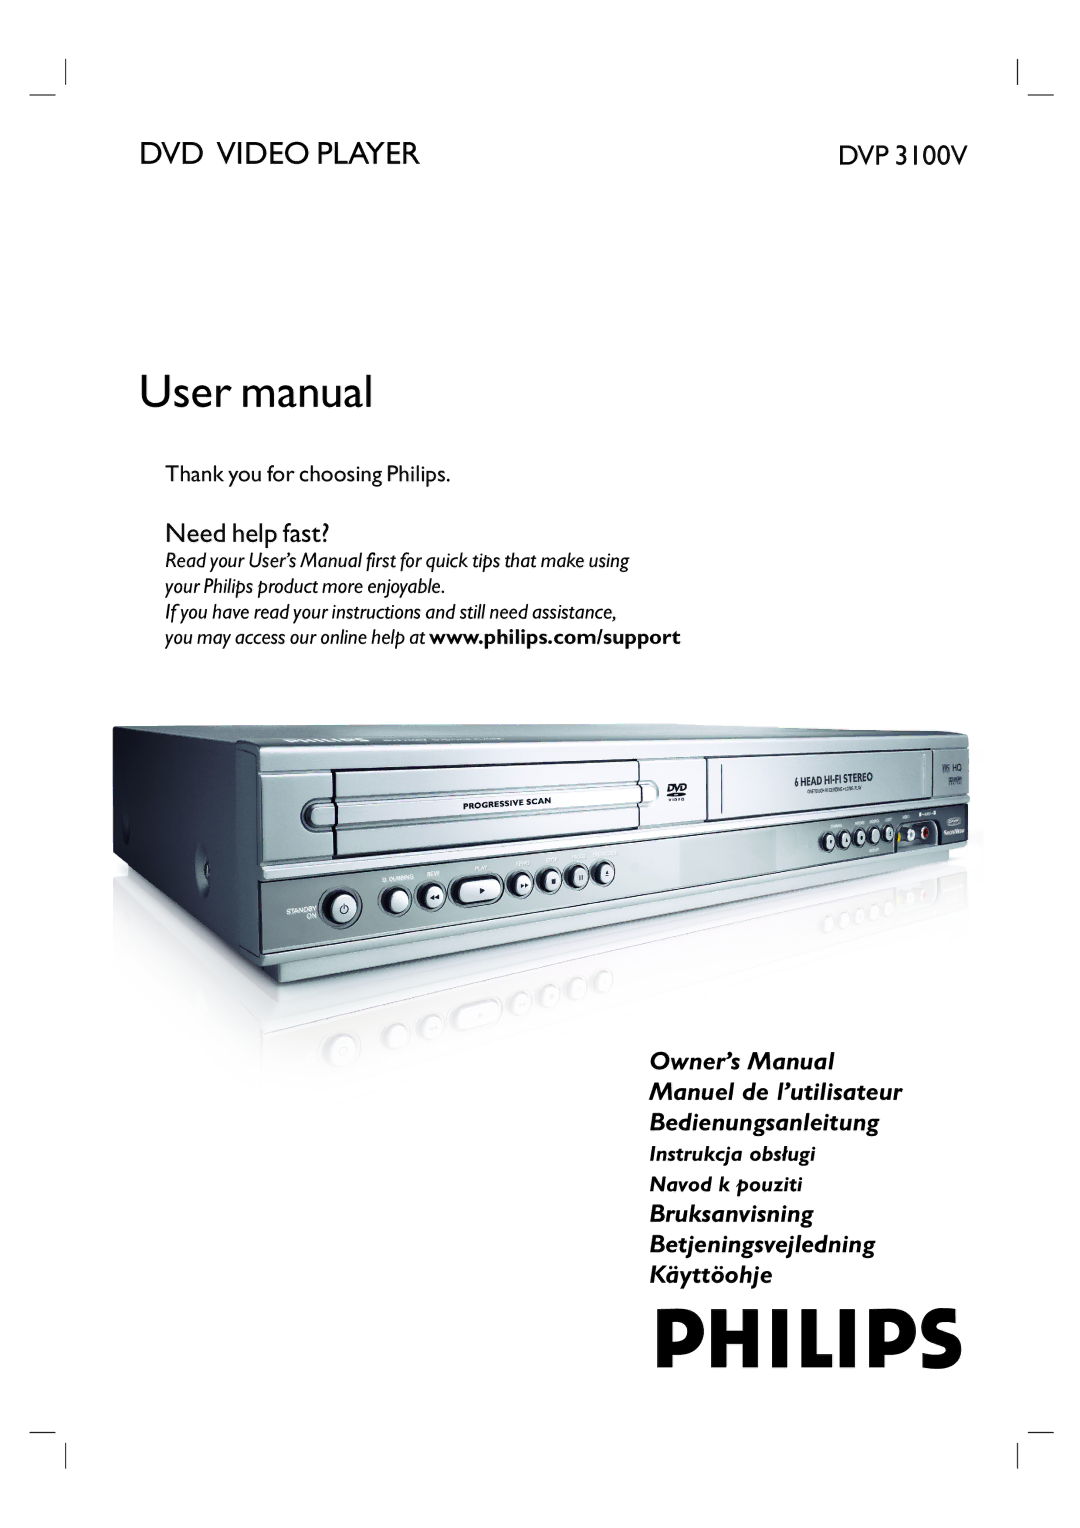 Philips DVP 3100V user manual DVD Video Player 